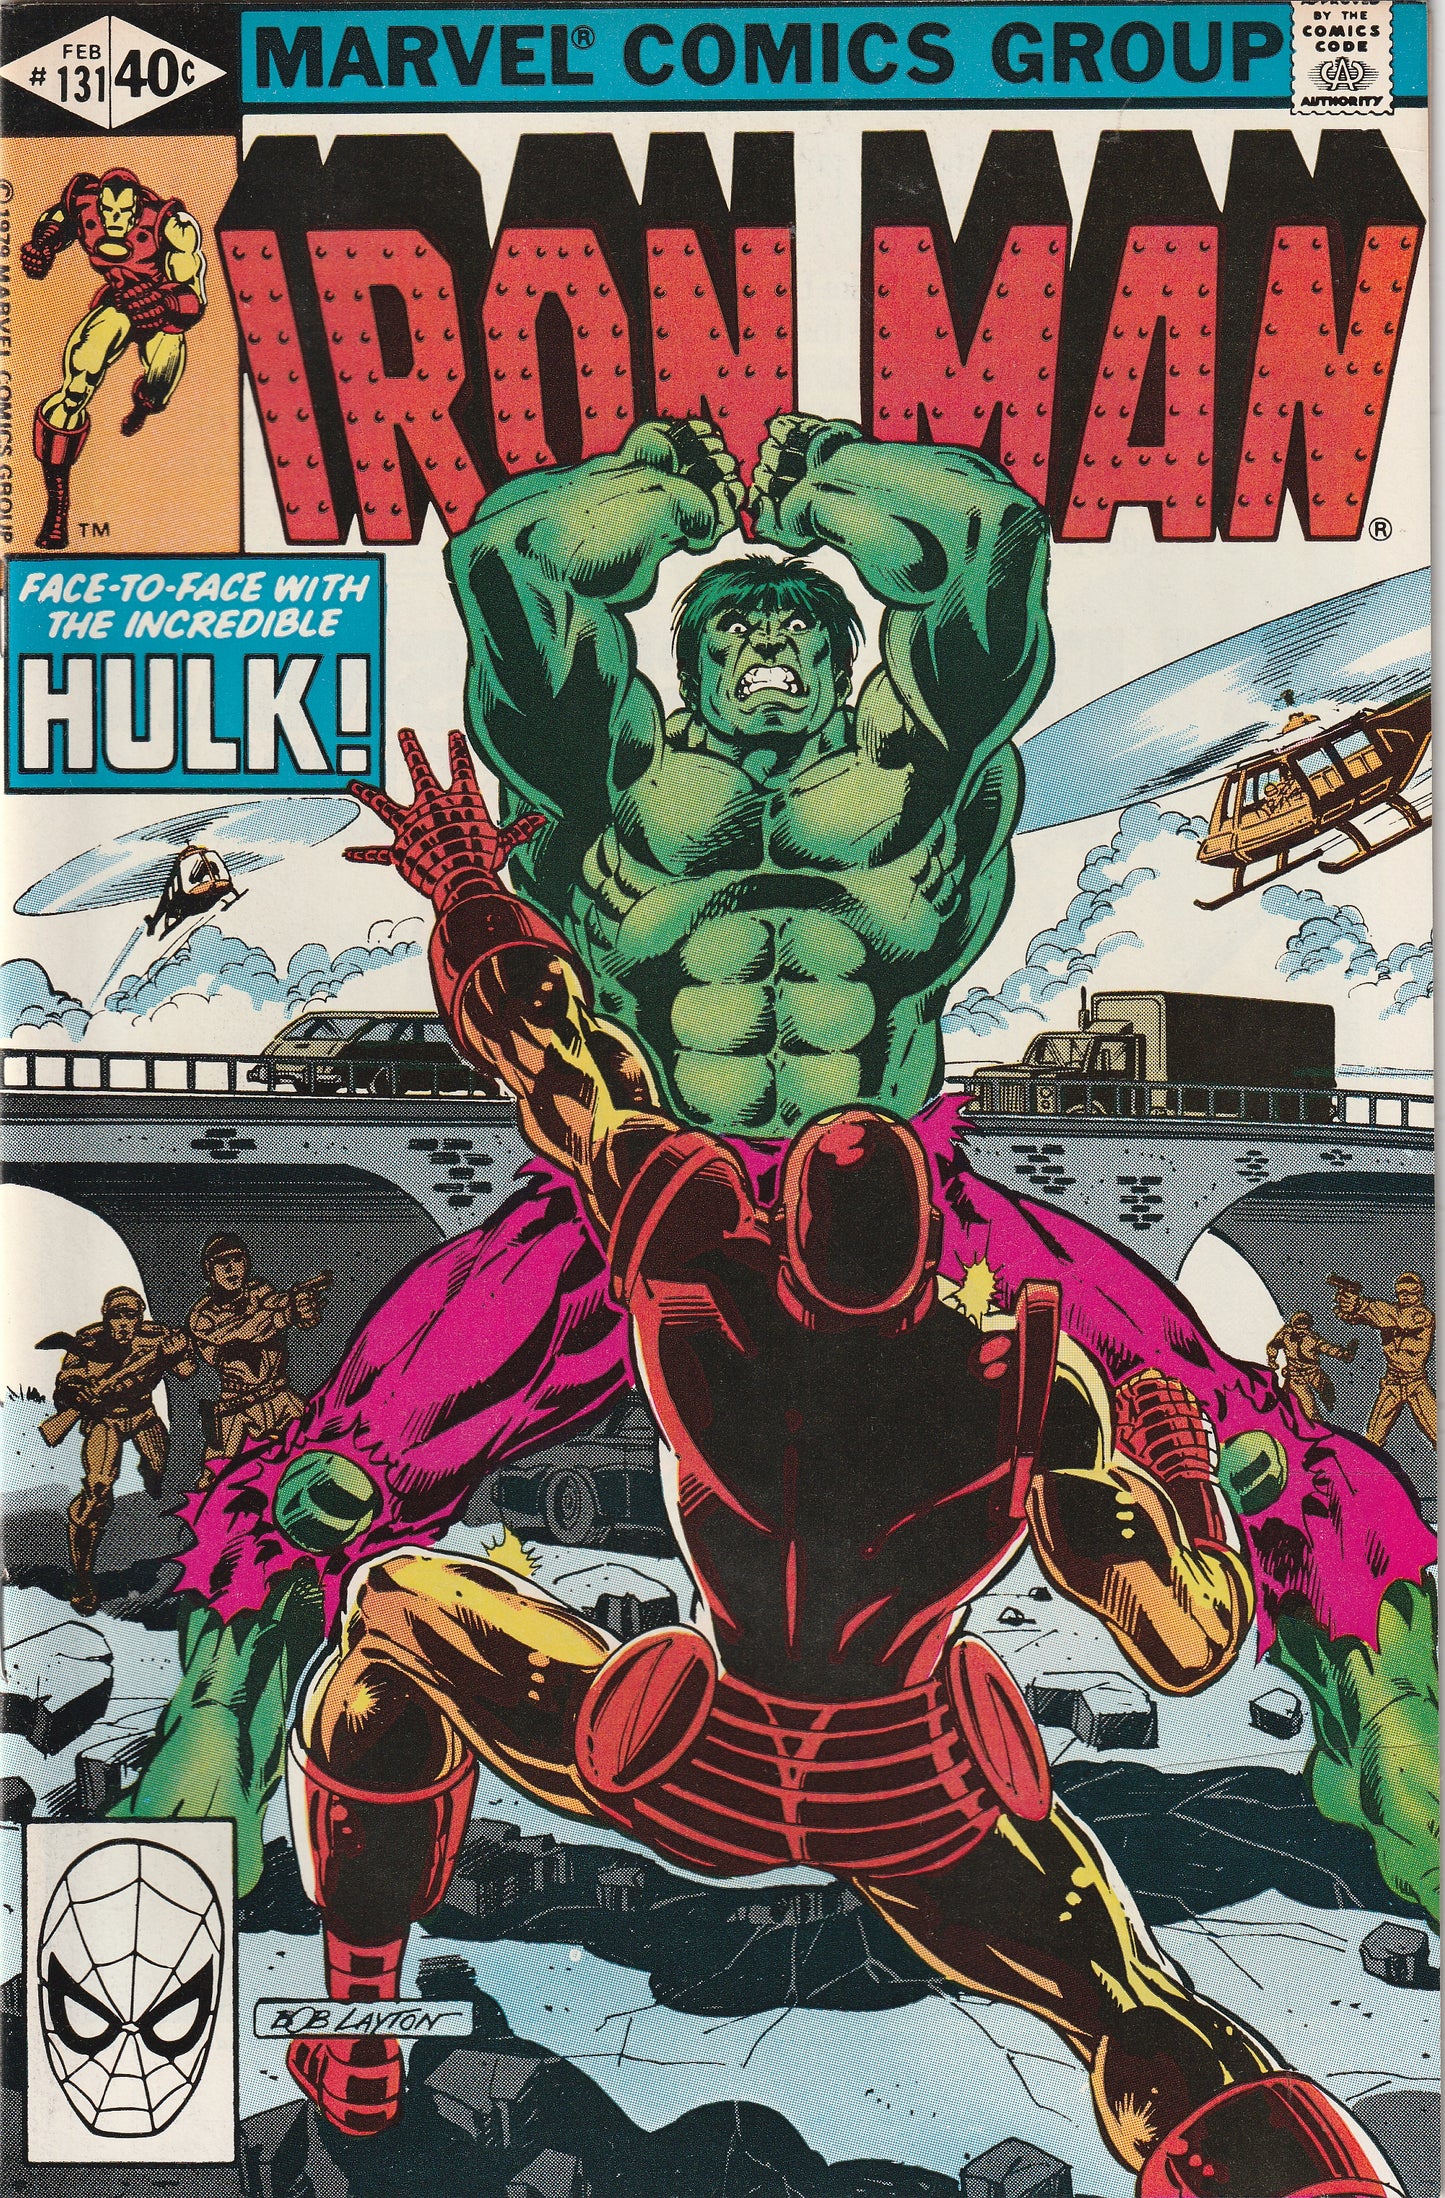 Iron Man #131 (1980) - Hulk crossover